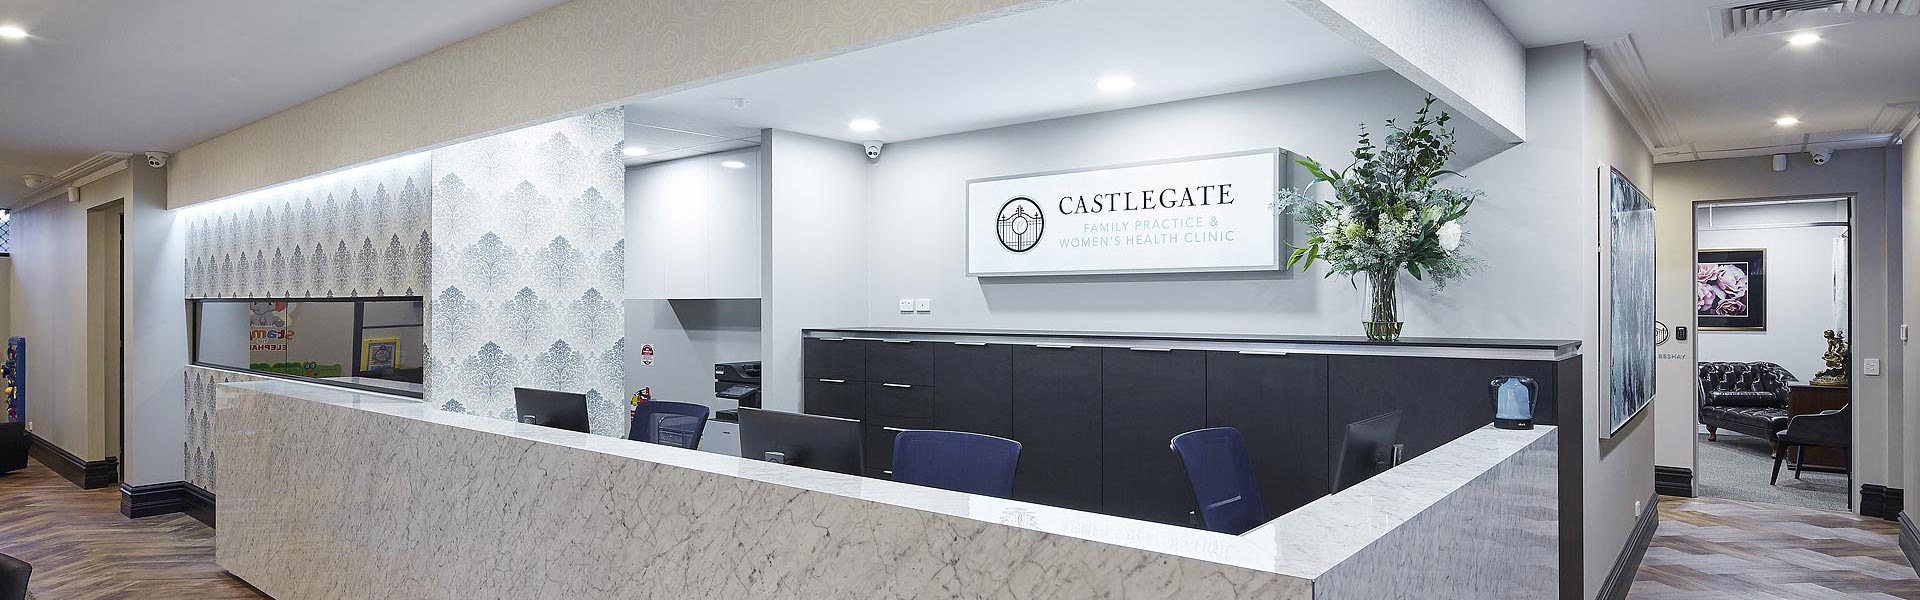 Castlegate Medical Centre Reception